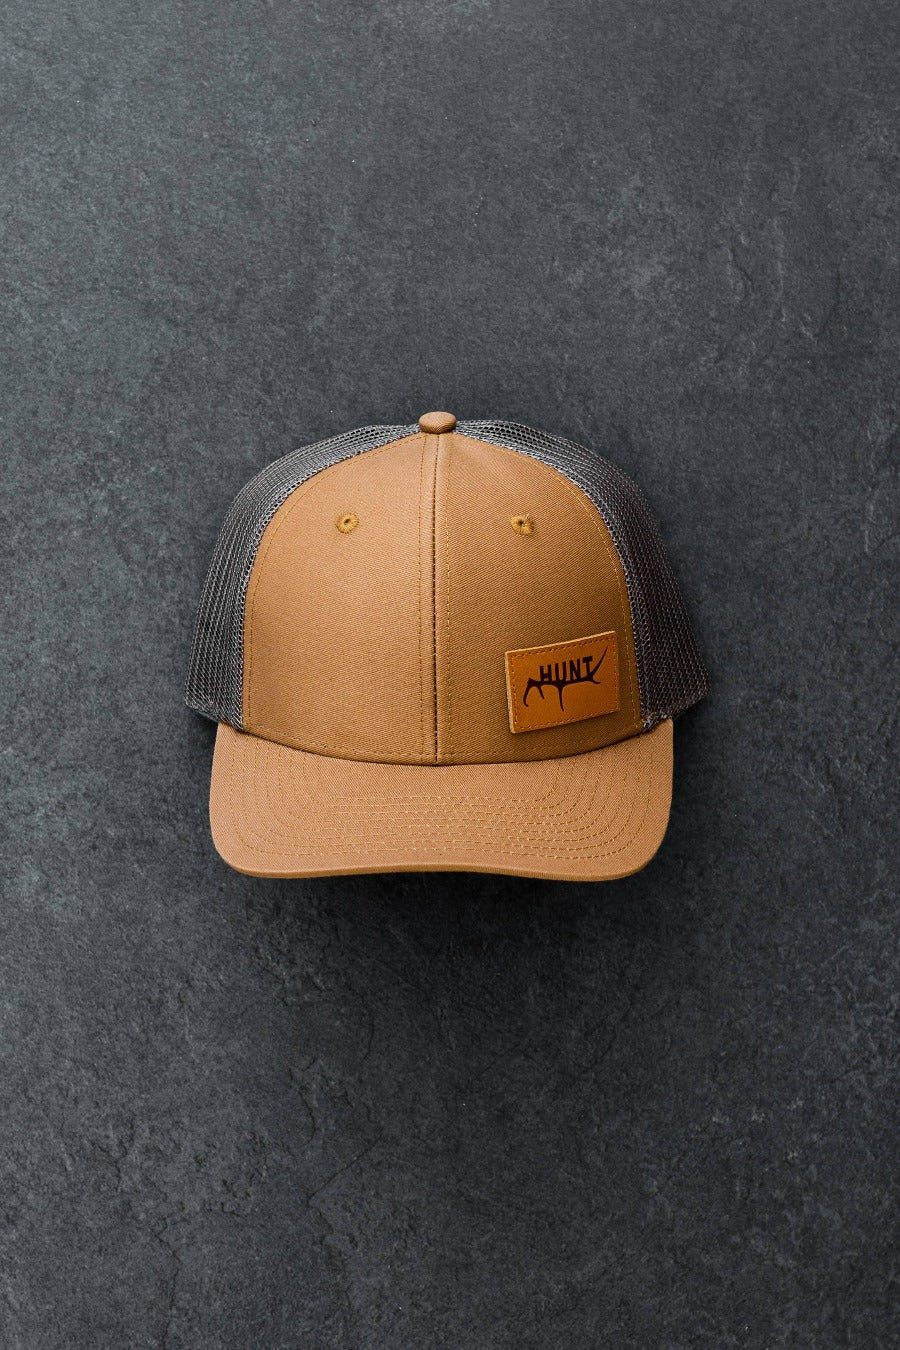 Men's Leather Badge "Hunt" Trucker Hat